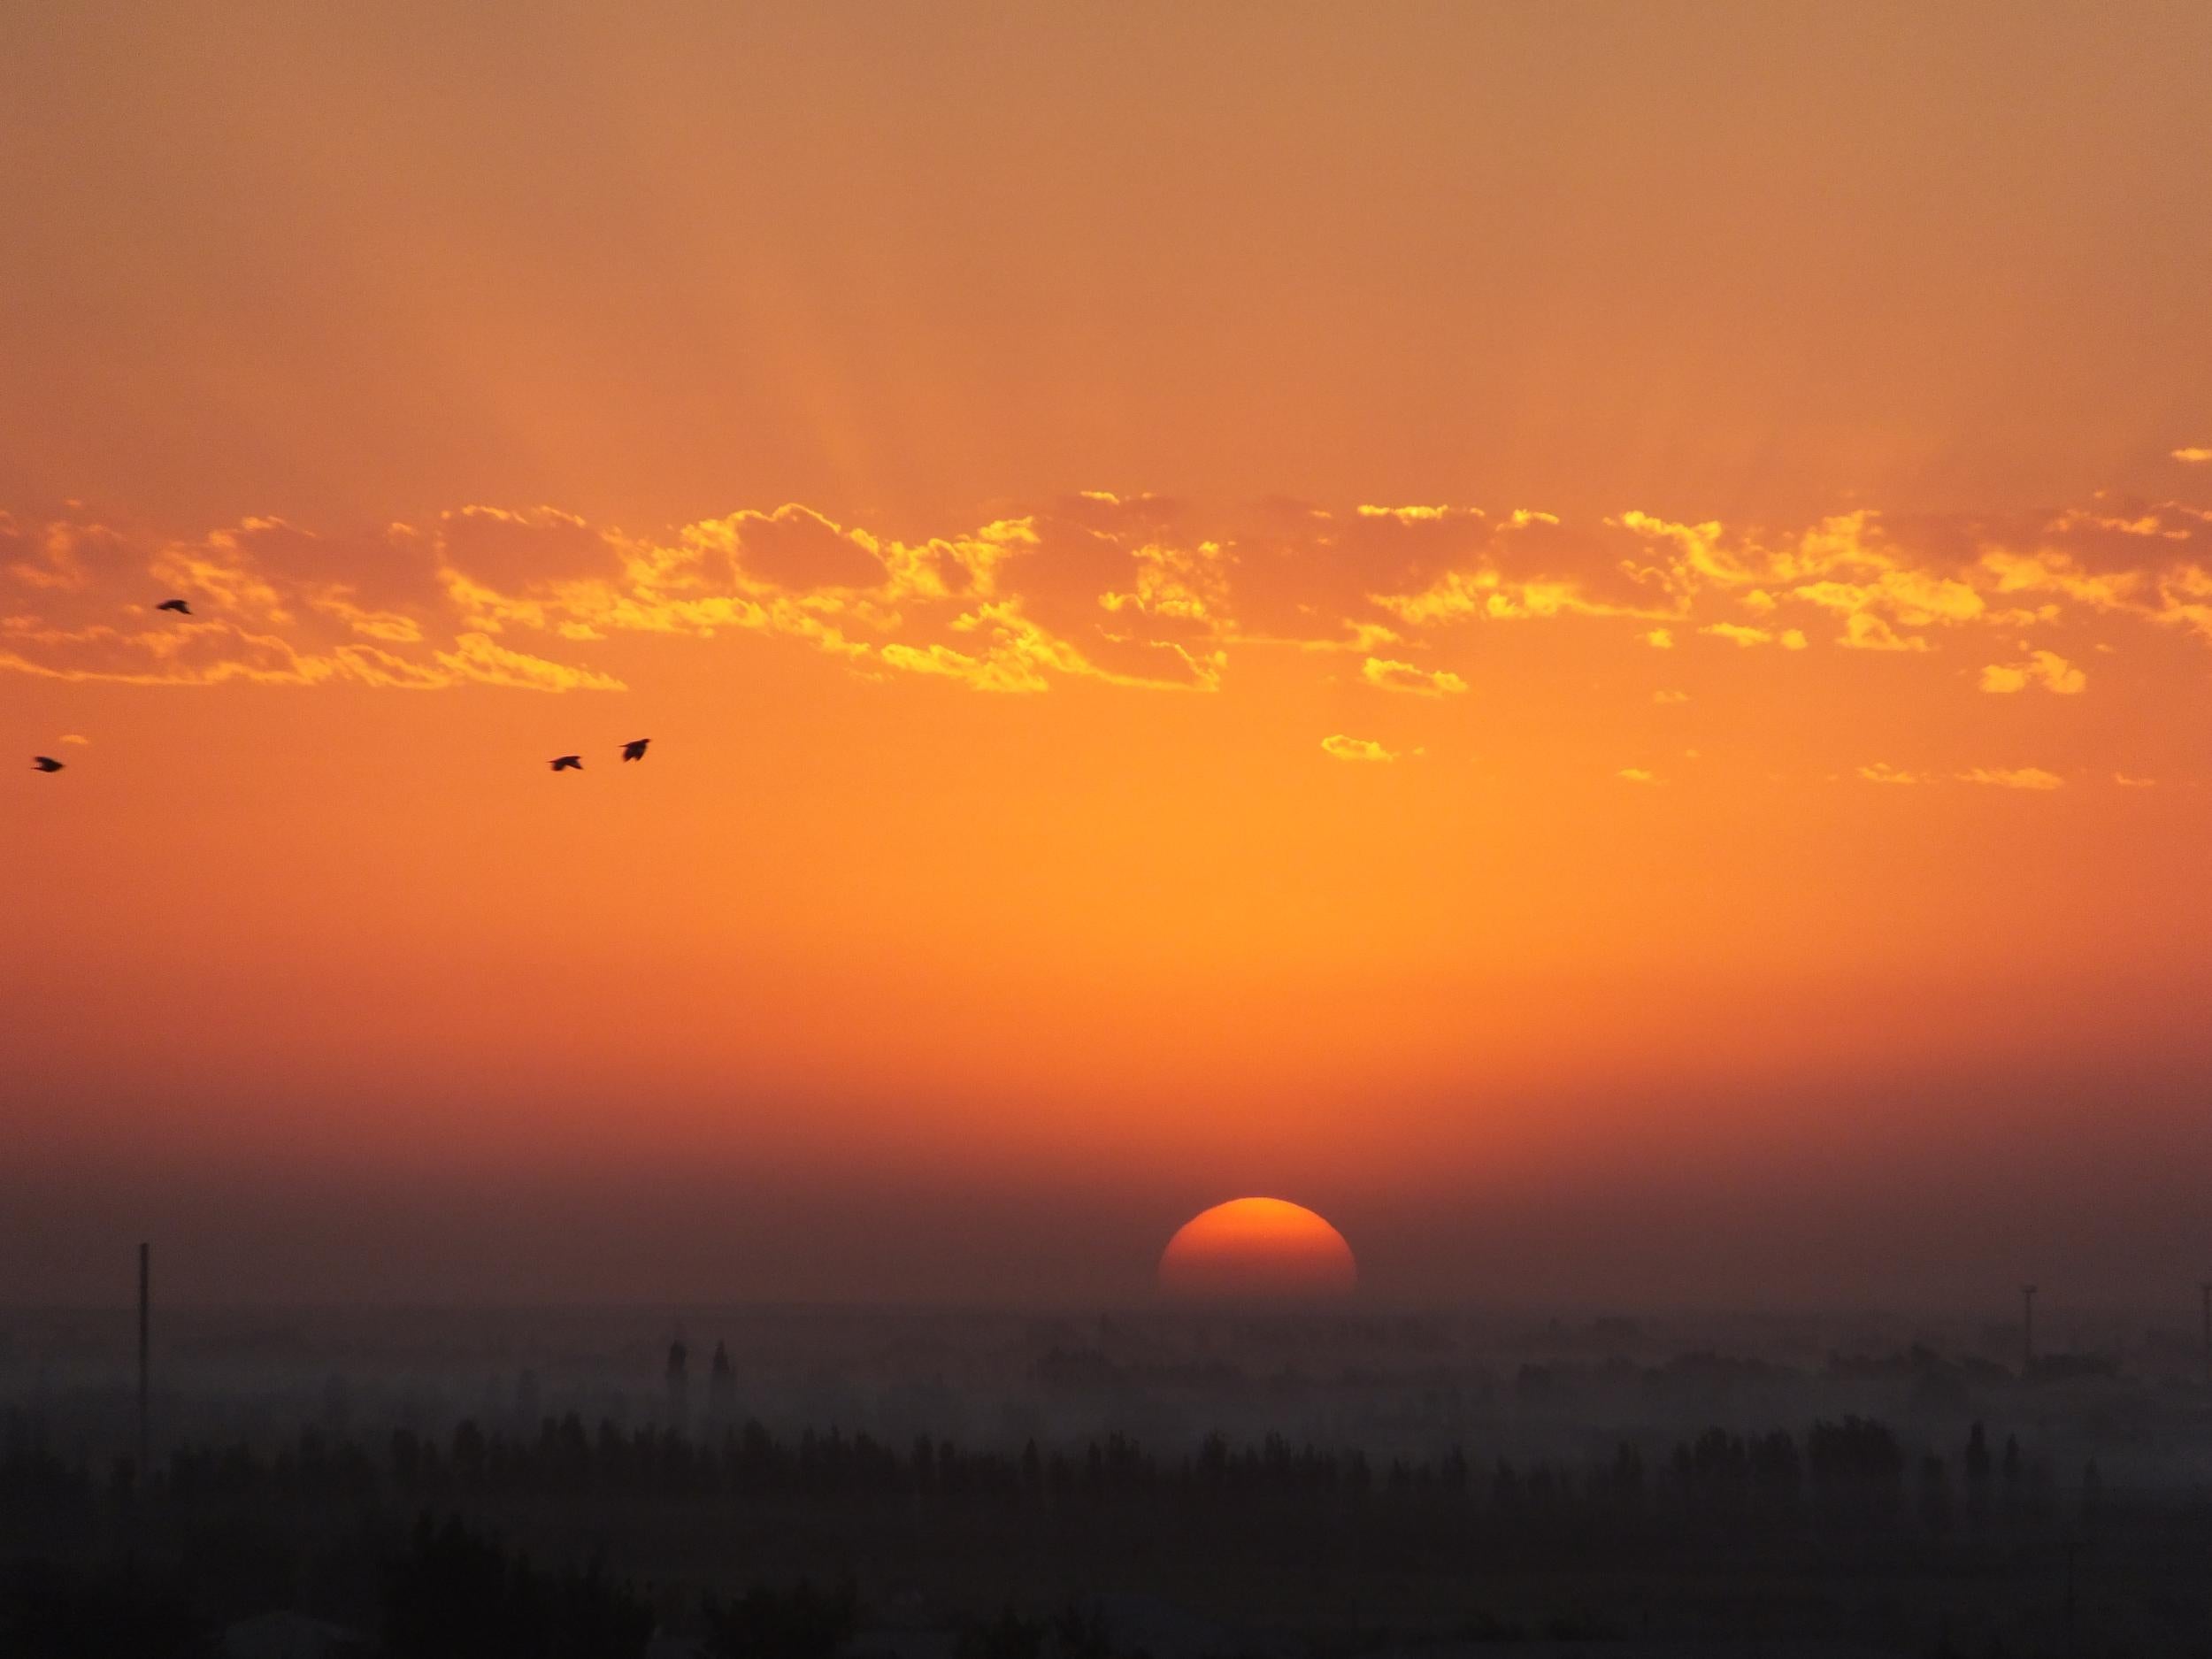 Sunset as seen from the walls of Khiva, Uzbekistan